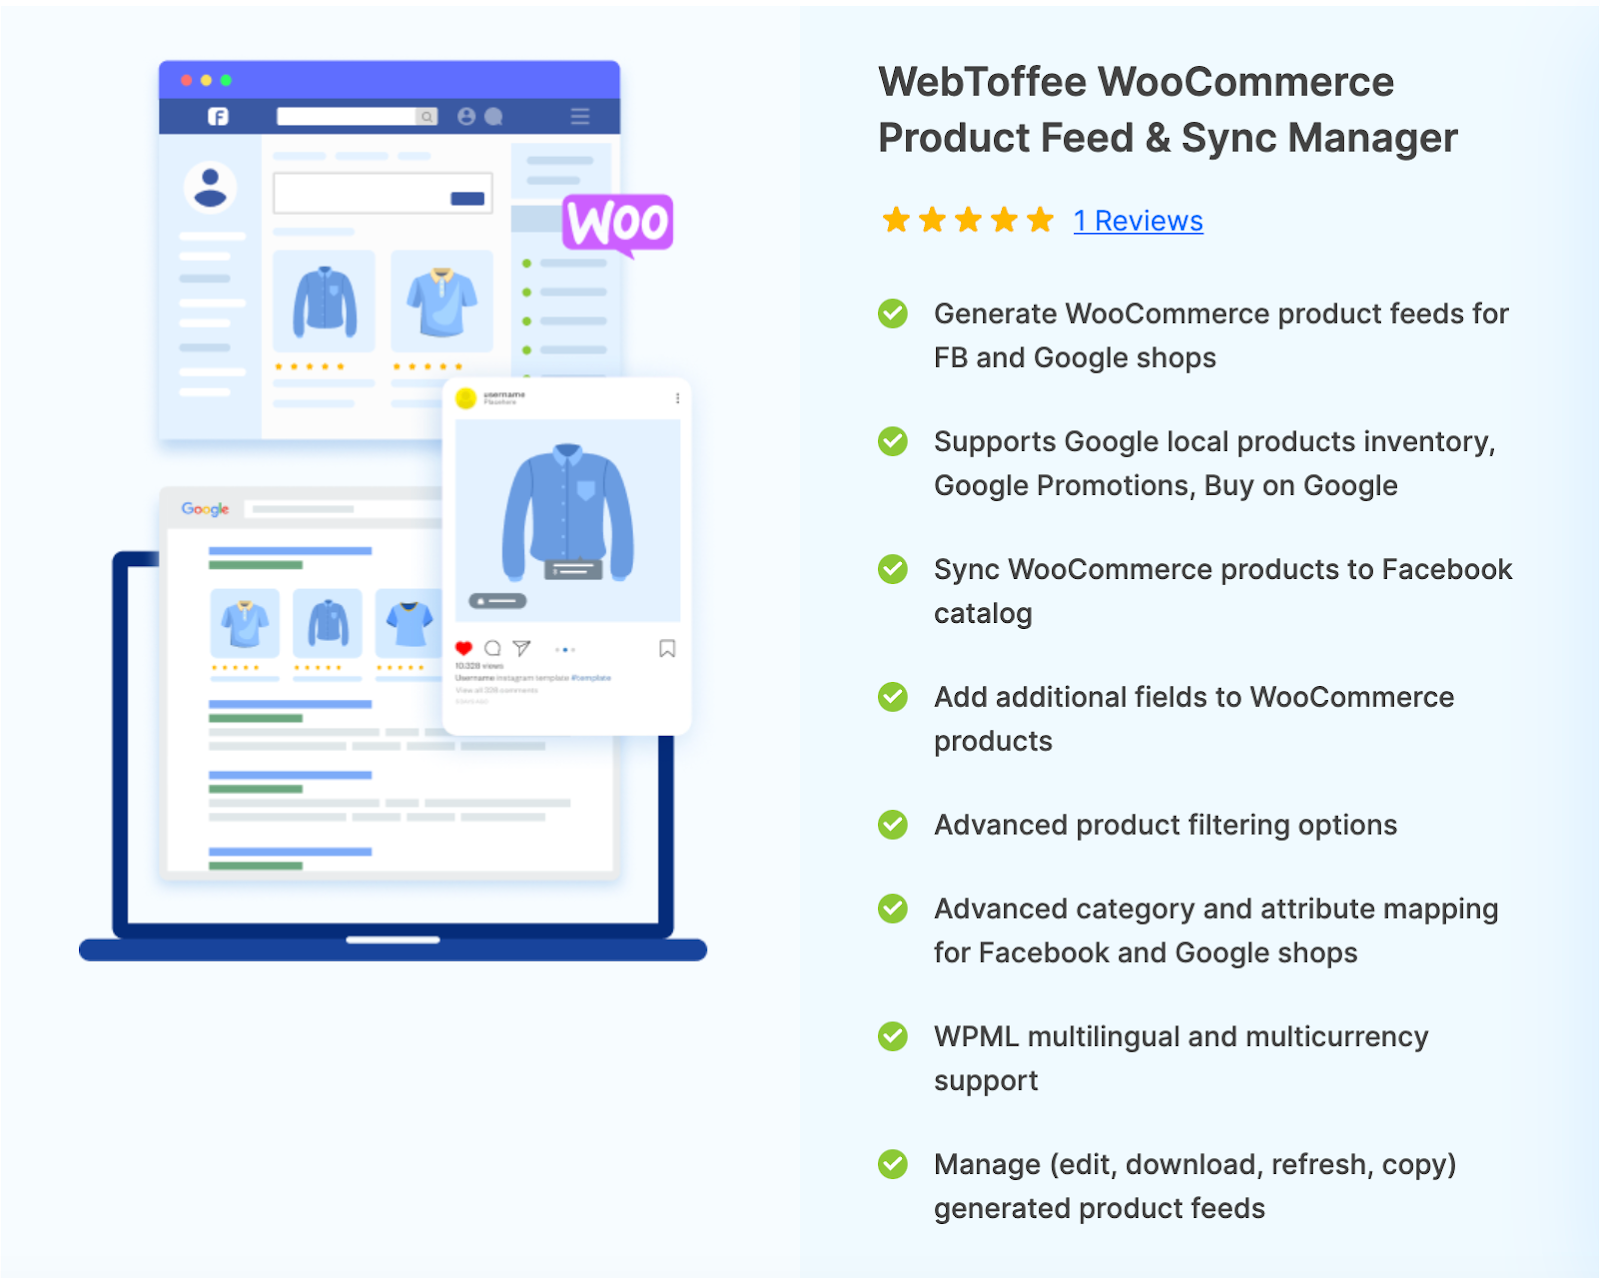 15. WebToffee WooCommerce Product Feed & Sync Manager